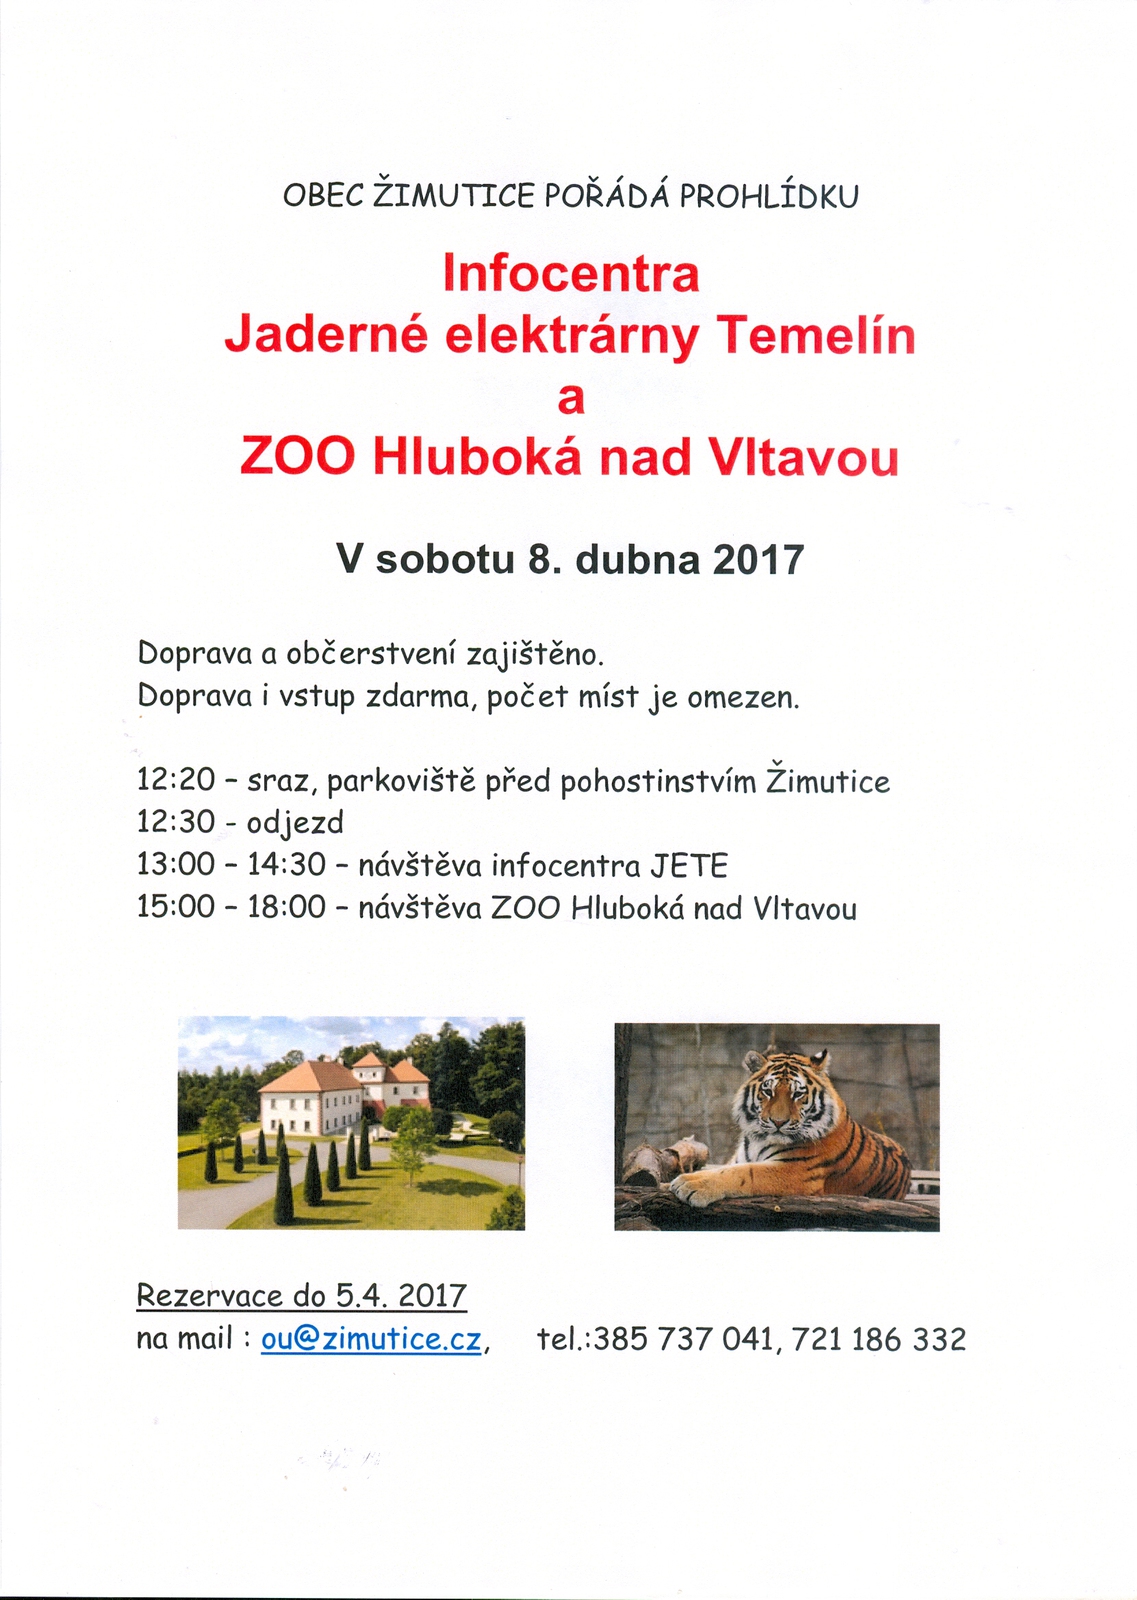 Infocentrum Jaderné elektrárny Temelín a ZOO Hluboká nad Vltavou